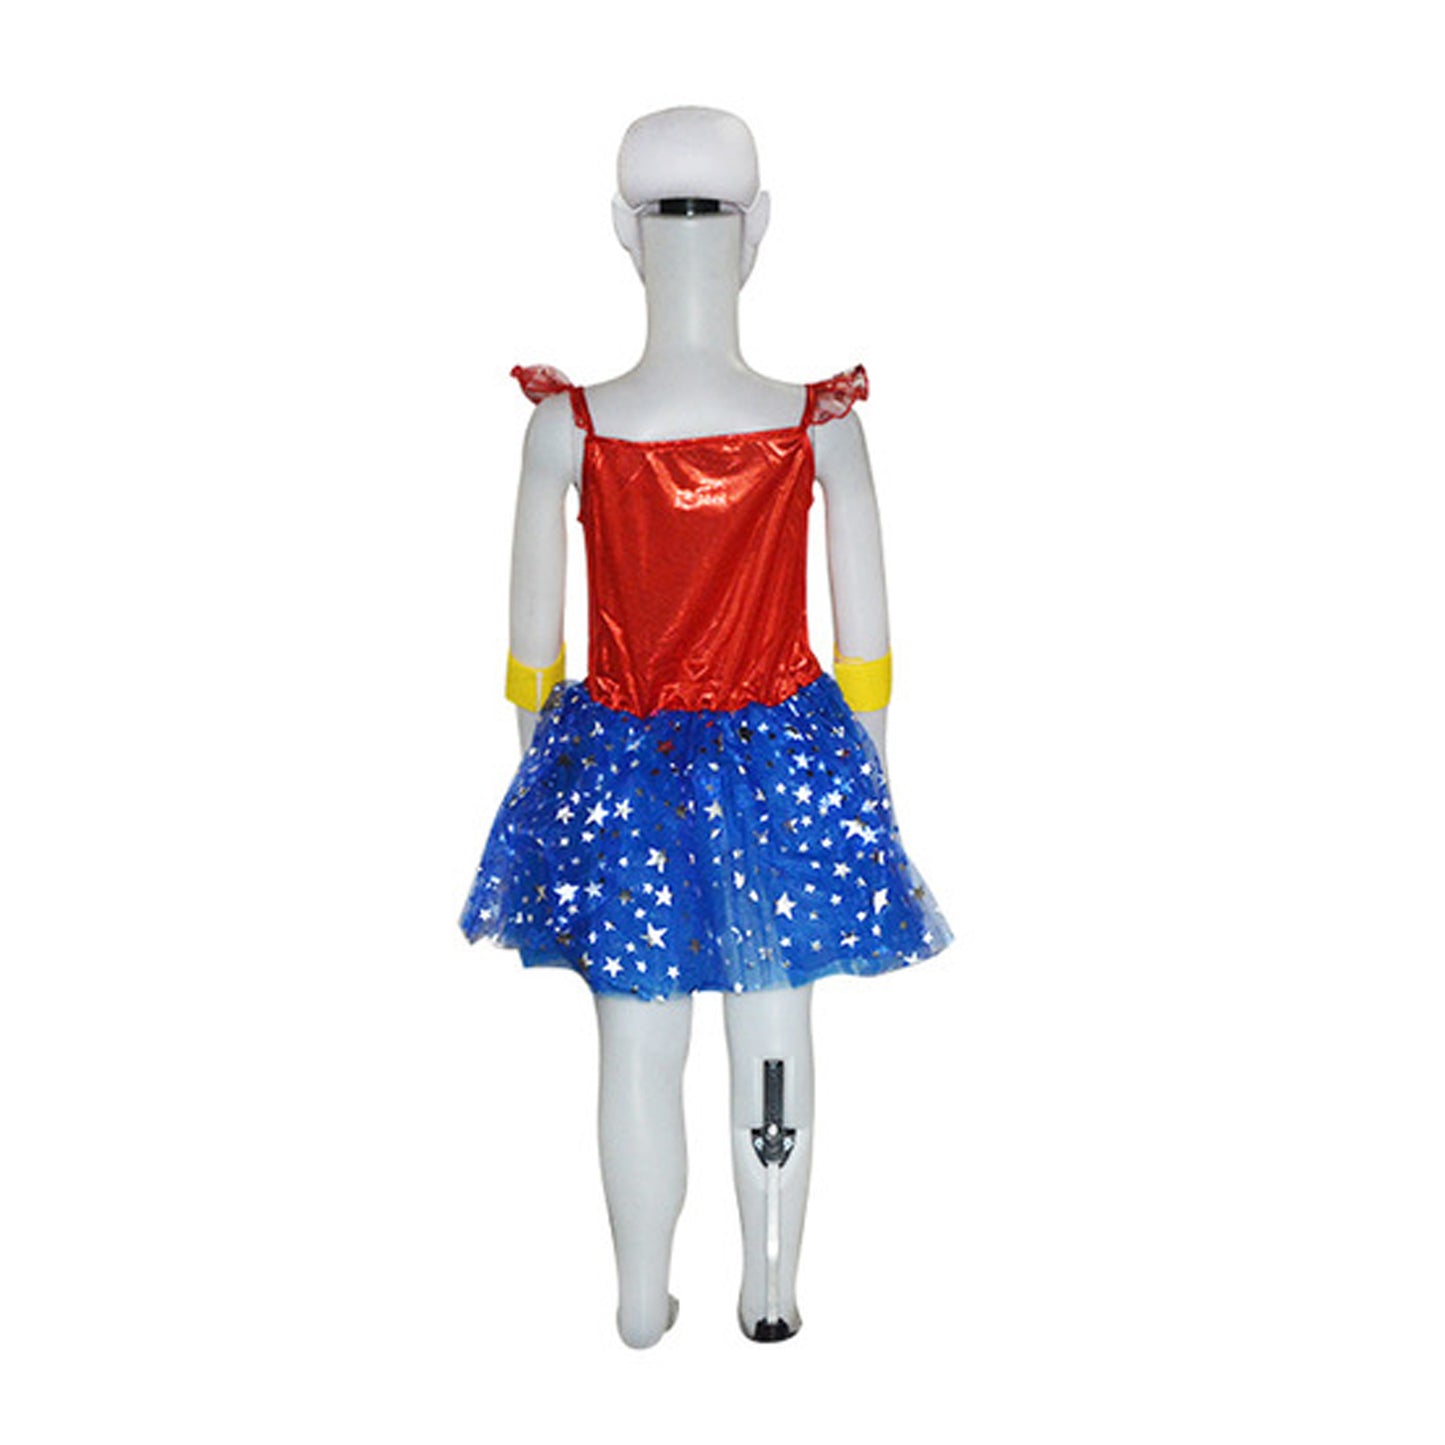 Wonder Woman Tutu Dress